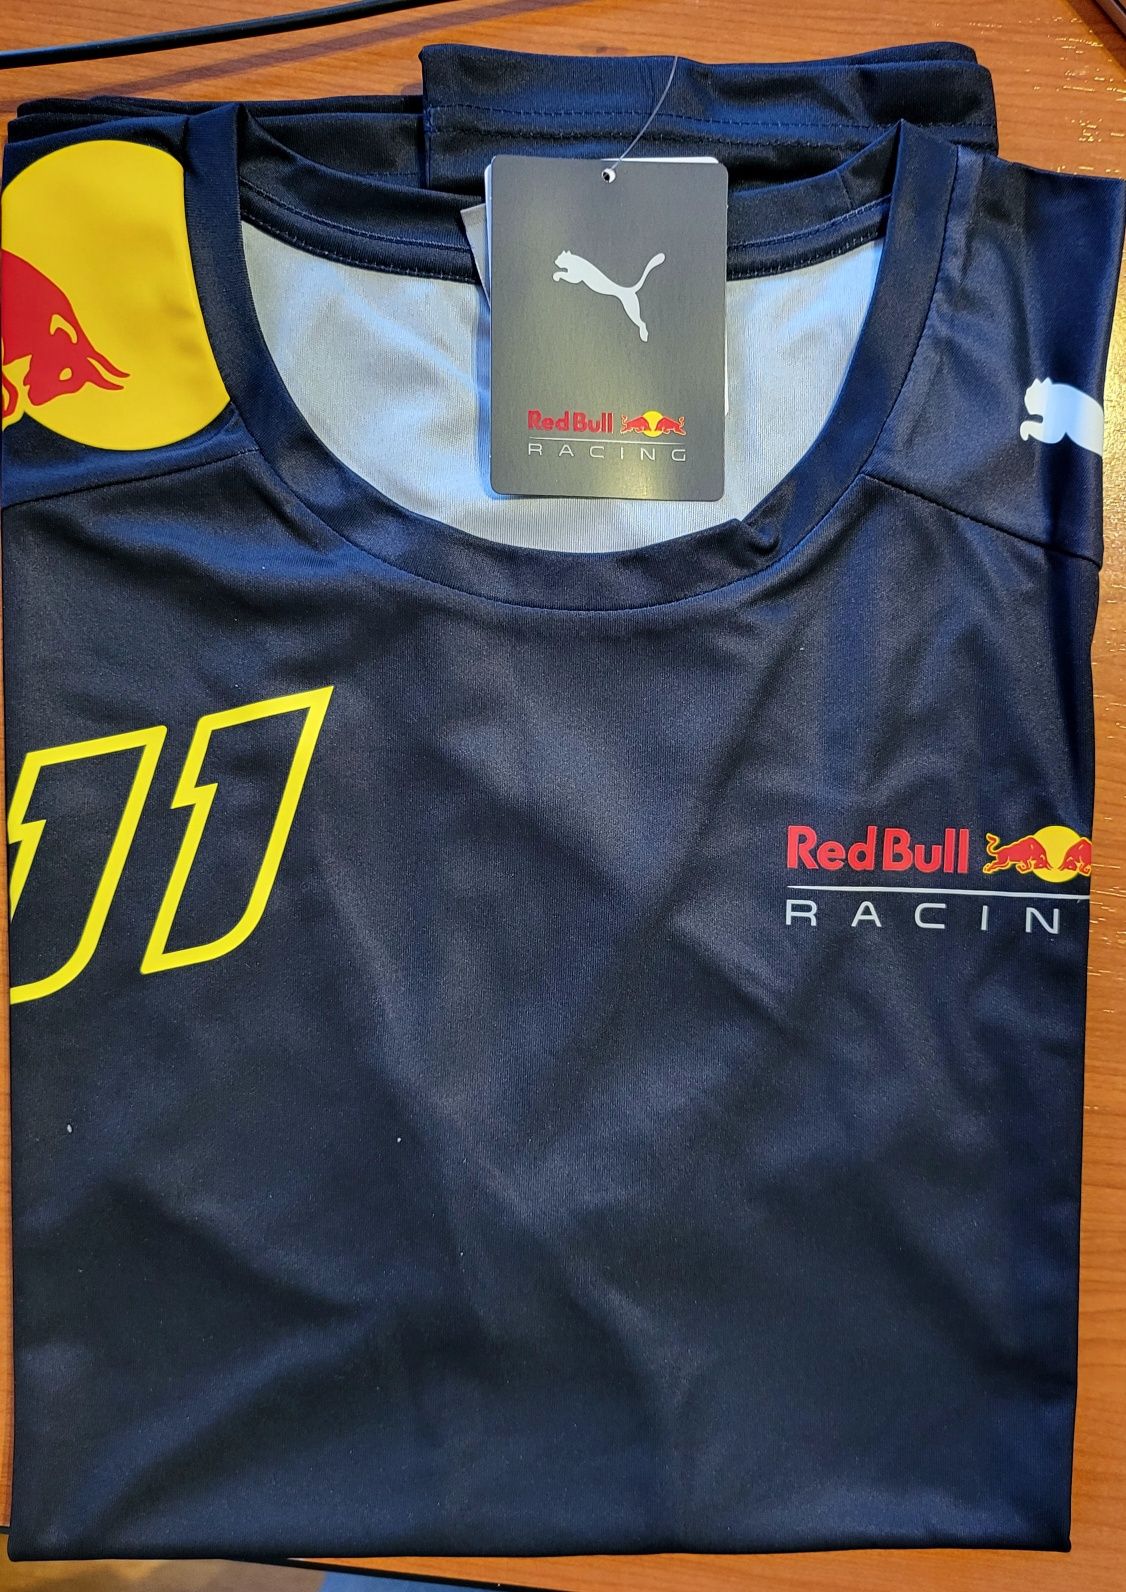 Merchandising Oficial Mclaren e Red Bull - novos com etiquetas